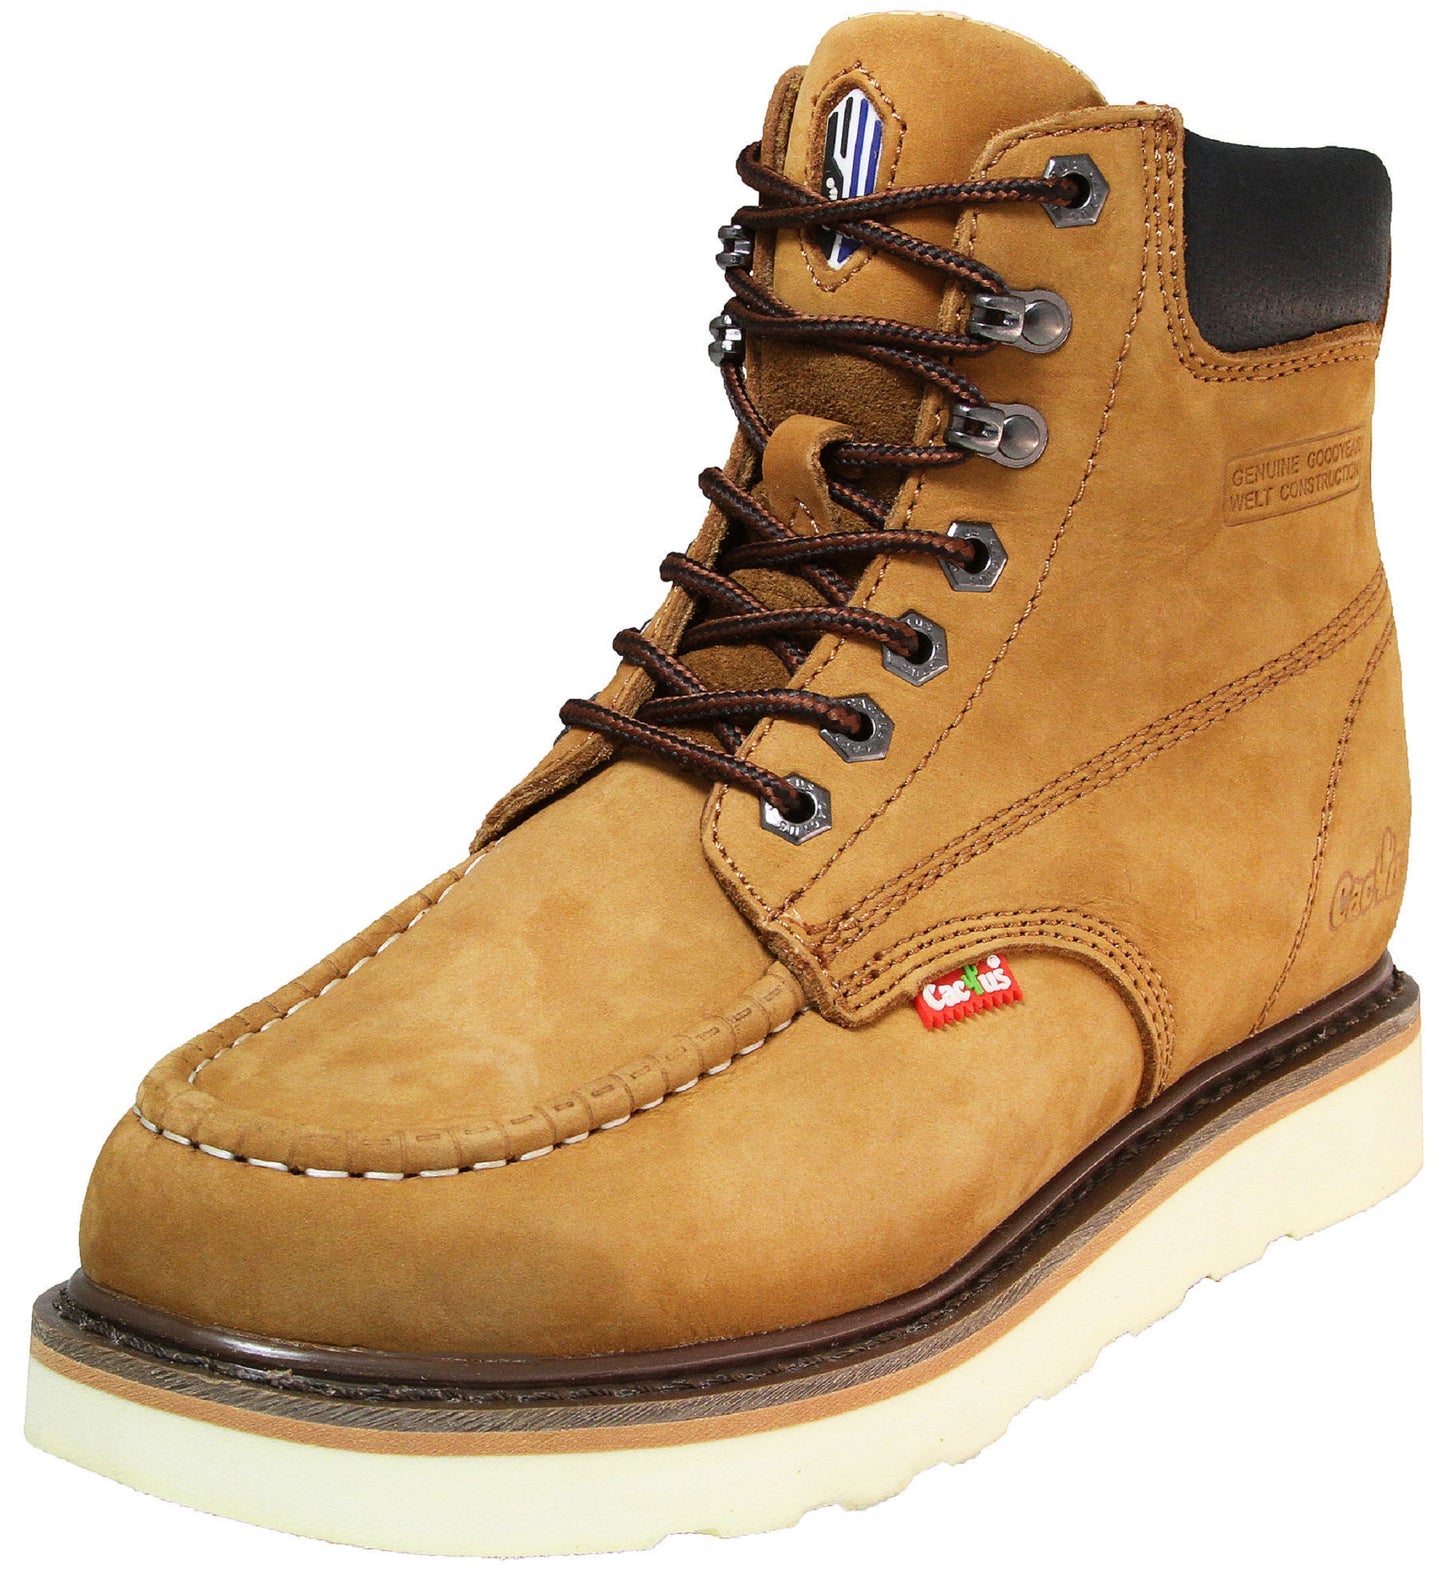 CACTUS Men's 6" Moccasin-Toe Oil Resistant Work Boots Brown 611M-BRWN